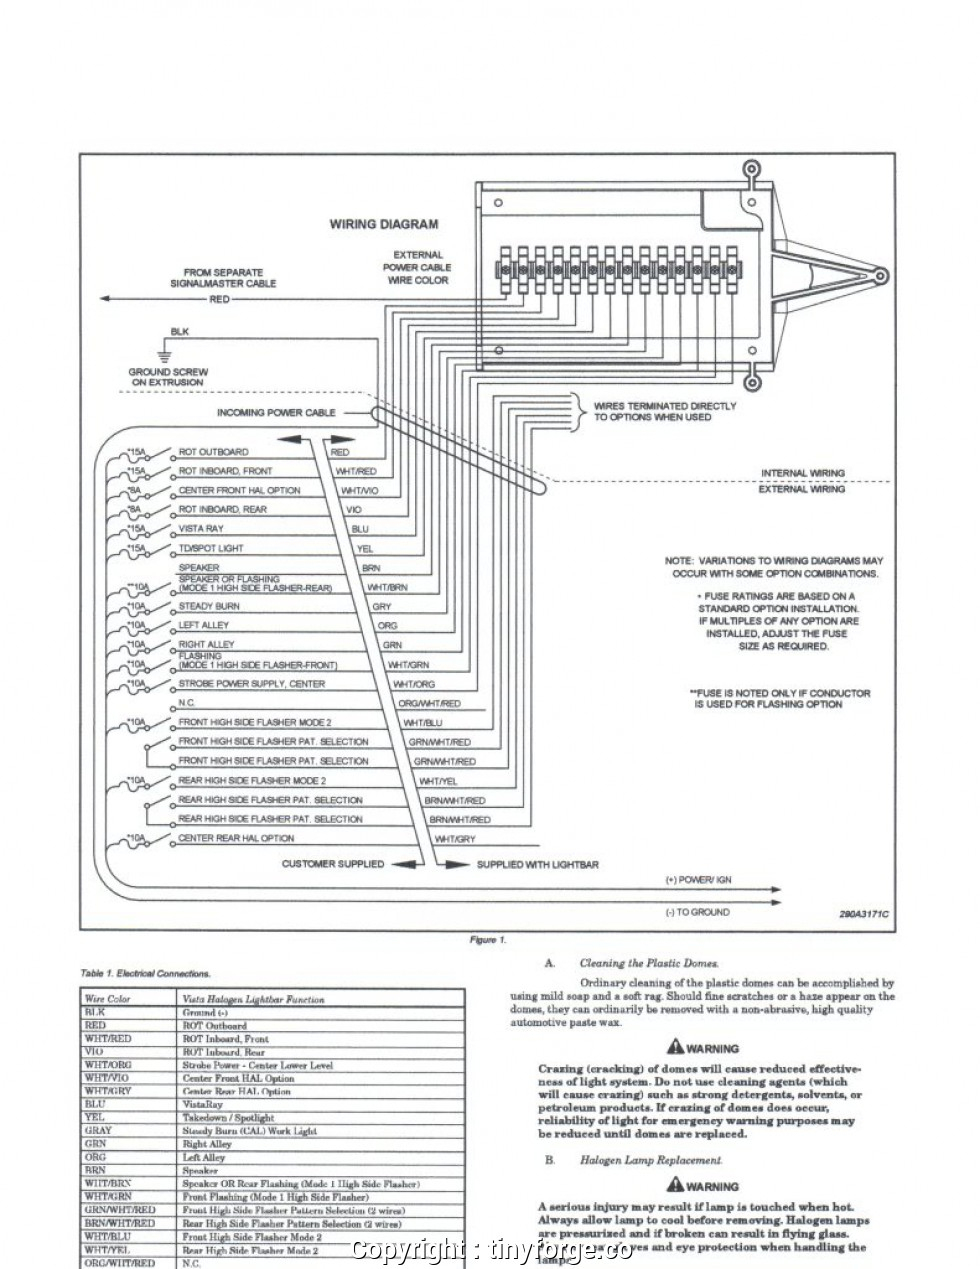 Whelen Power Supply Wiring Diagram | Wiring Library - Whelen Light Bar Wiring Diagram